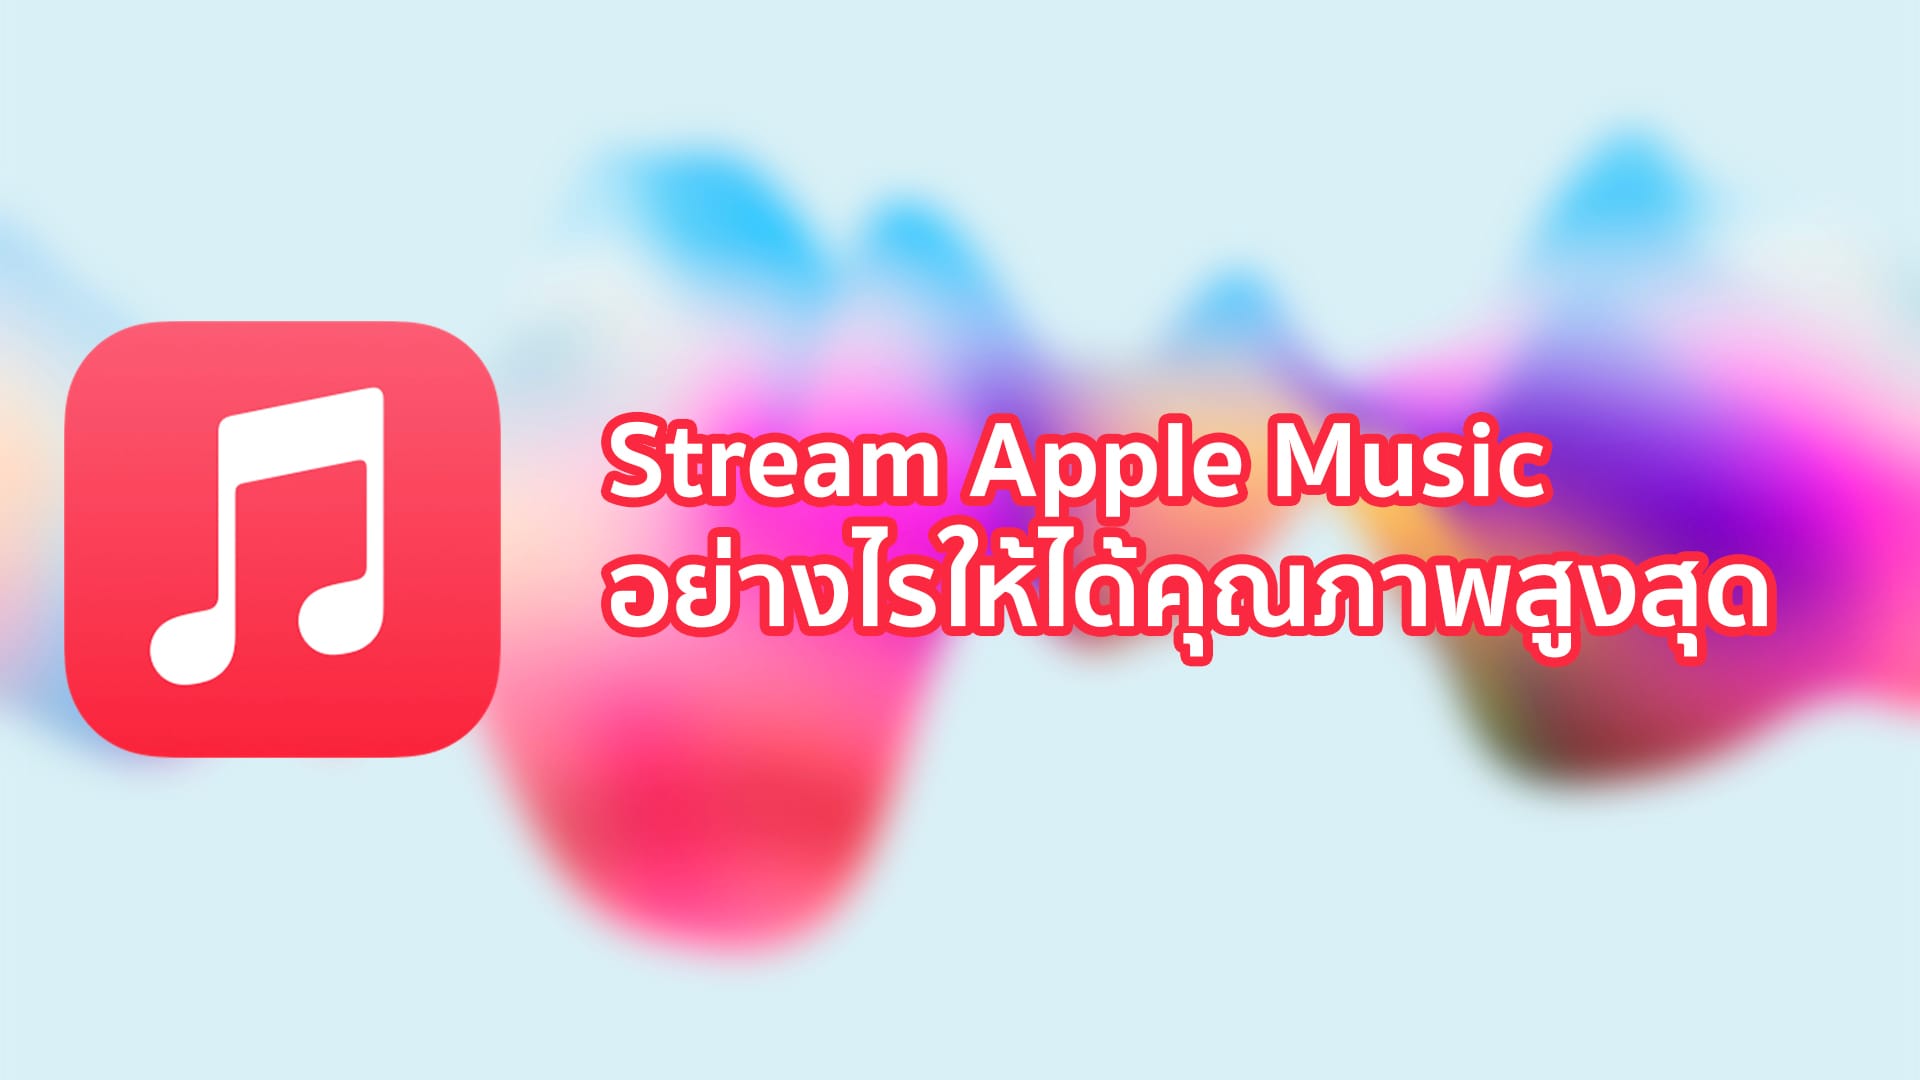 Stream Apple Music อย่างไรให้ได้คุณภาพสูงสุด